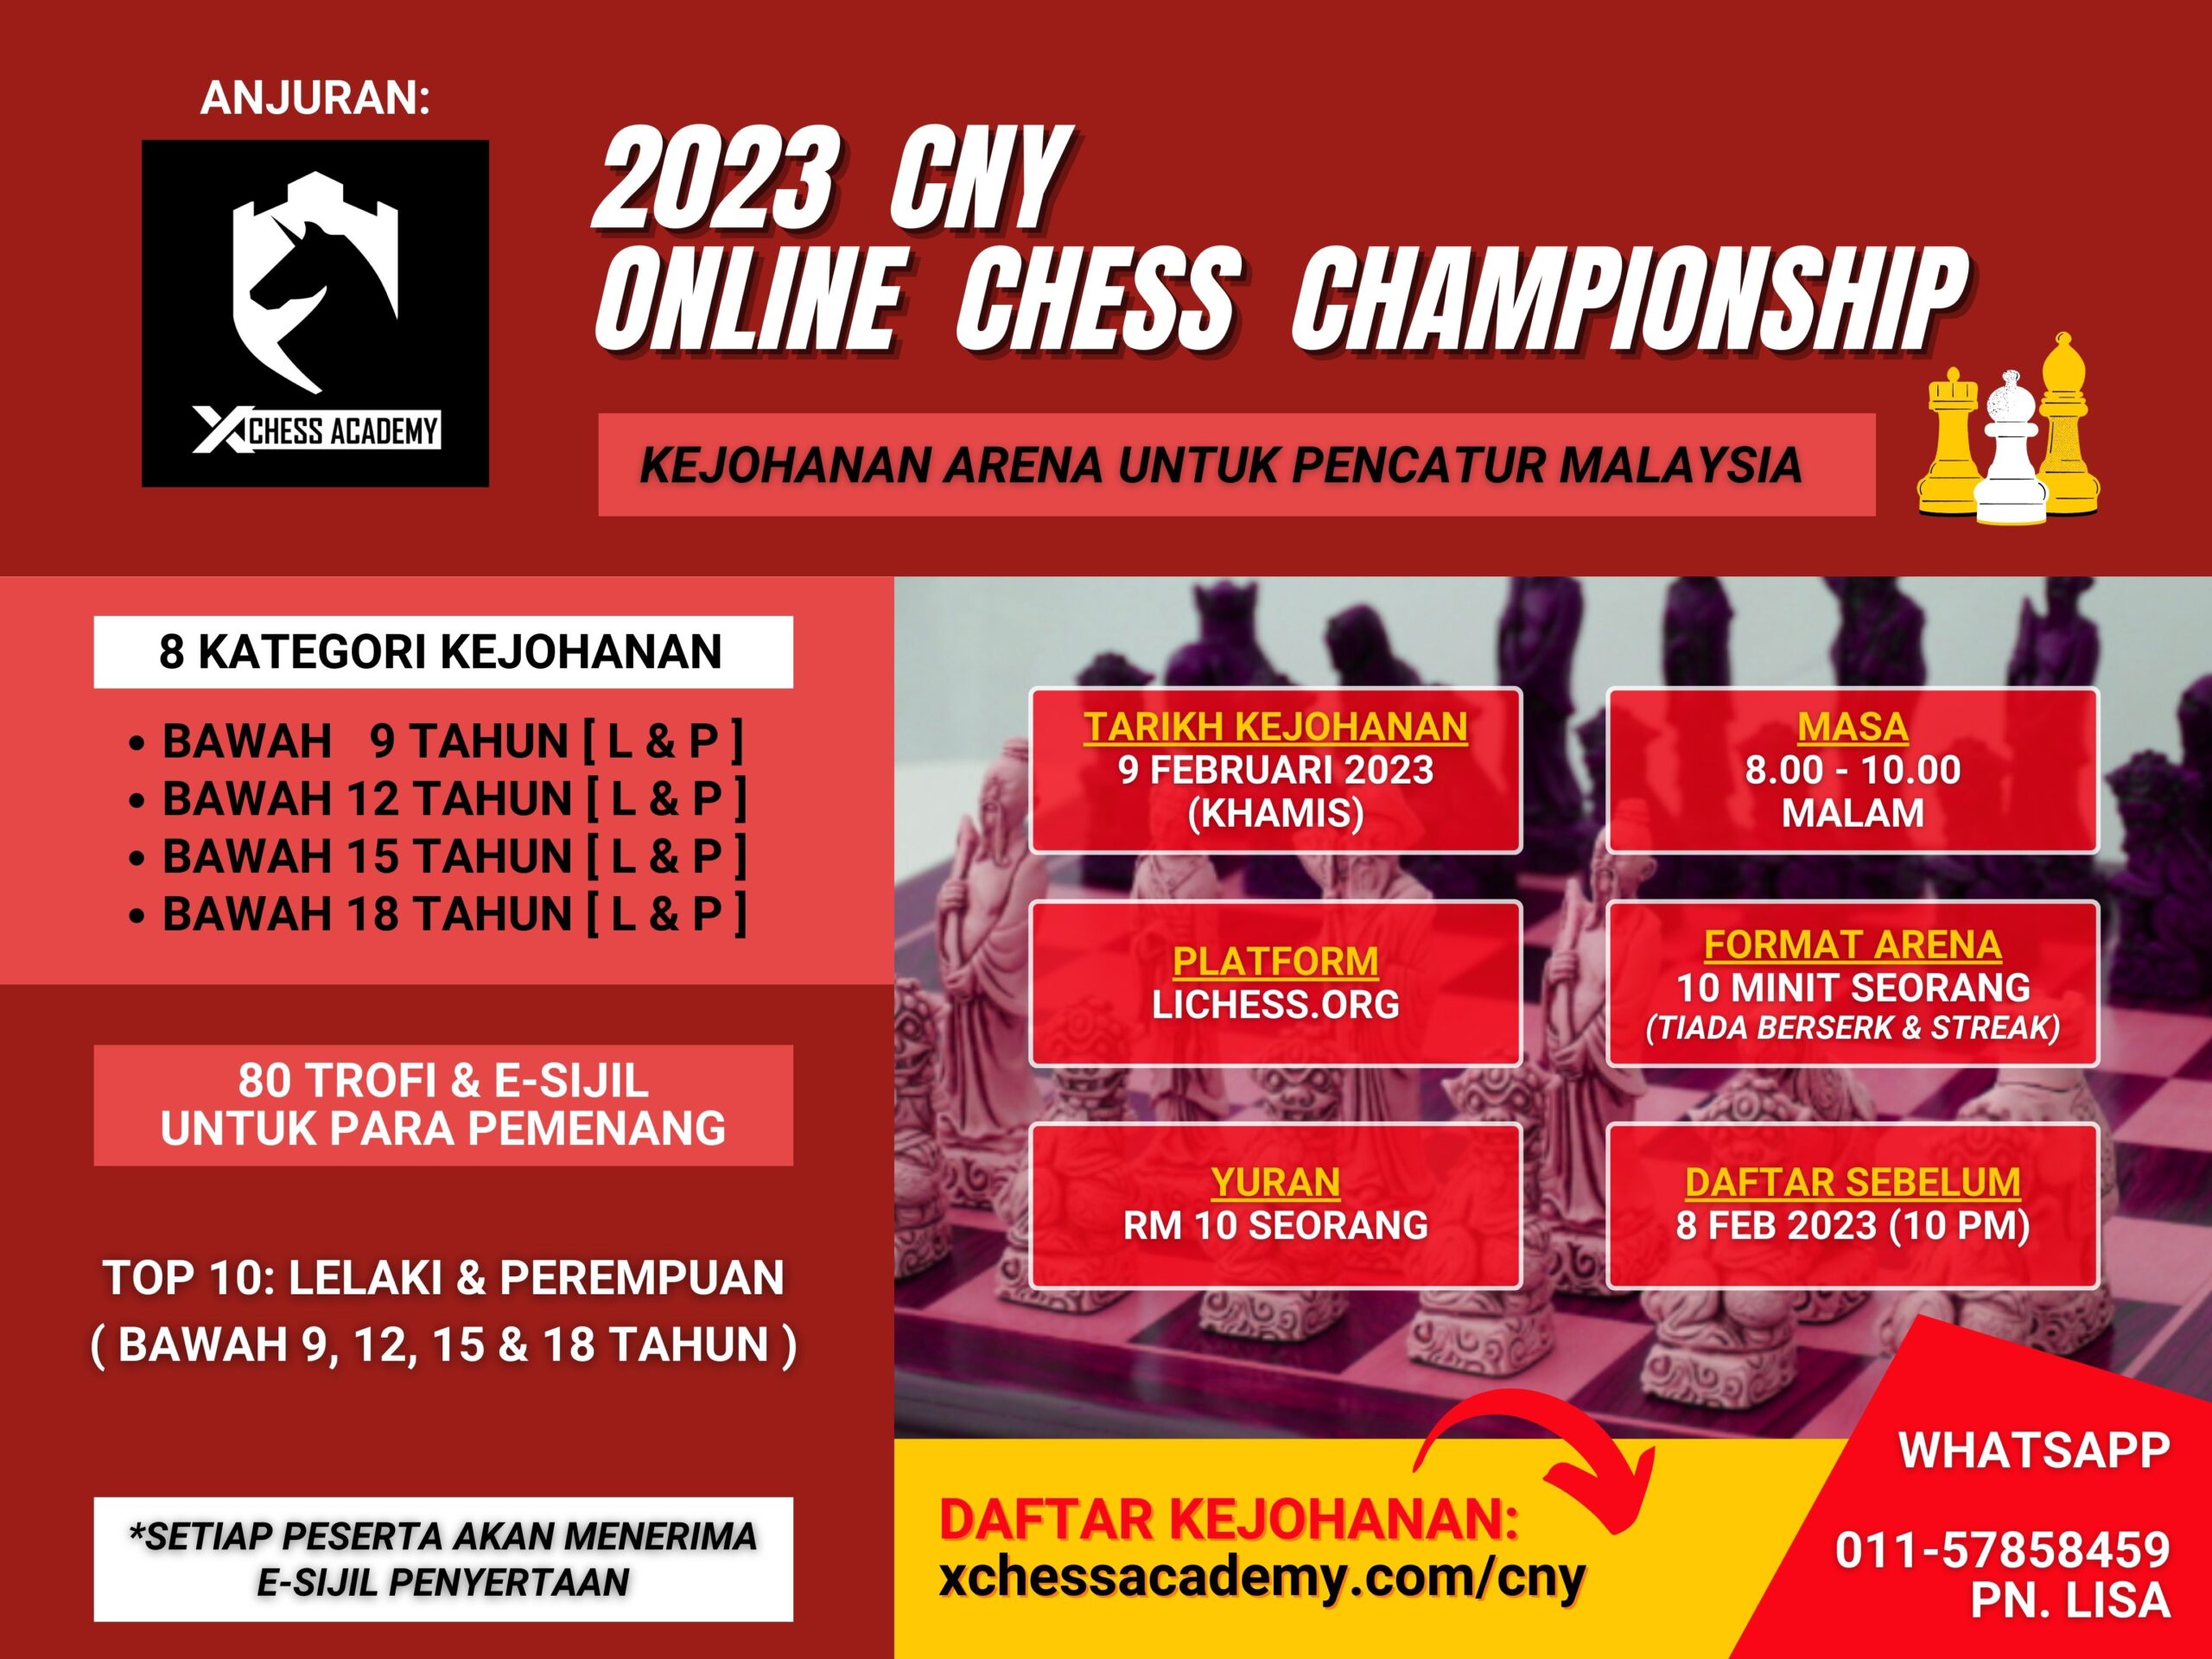 9 Feb 2023, 2023 CNY Online Chess Championship X Chess Academy